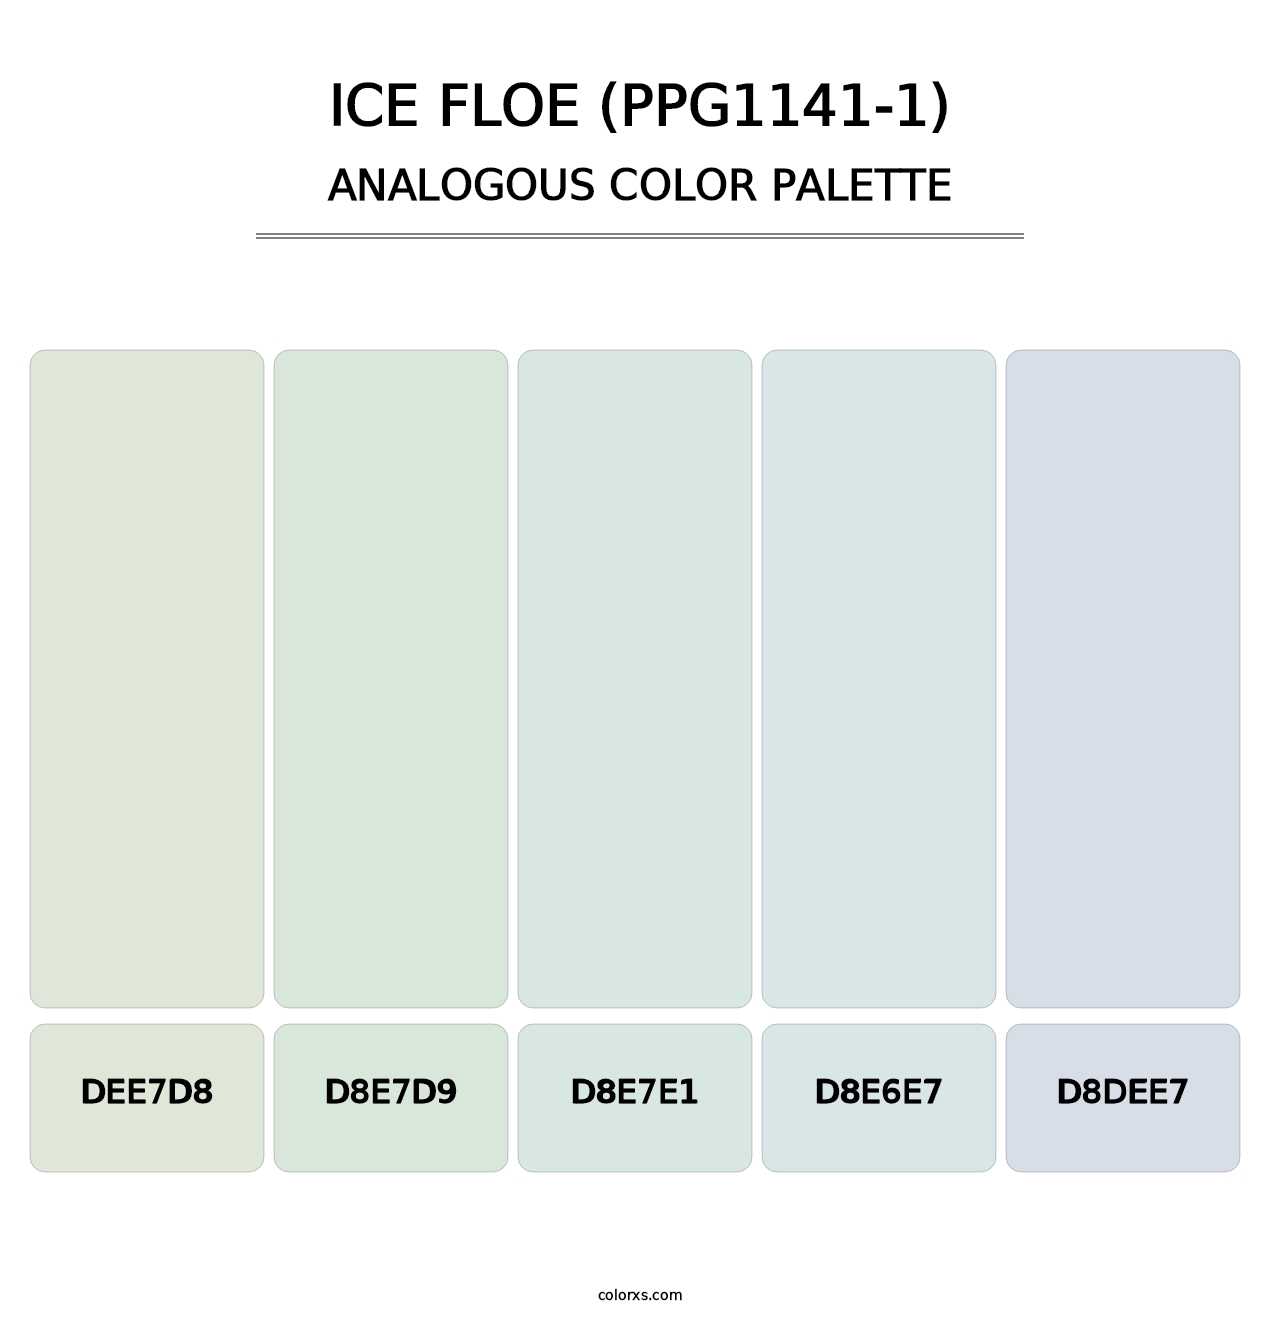 Ice Floe (PPG1141-1) - Analogous Color Palette